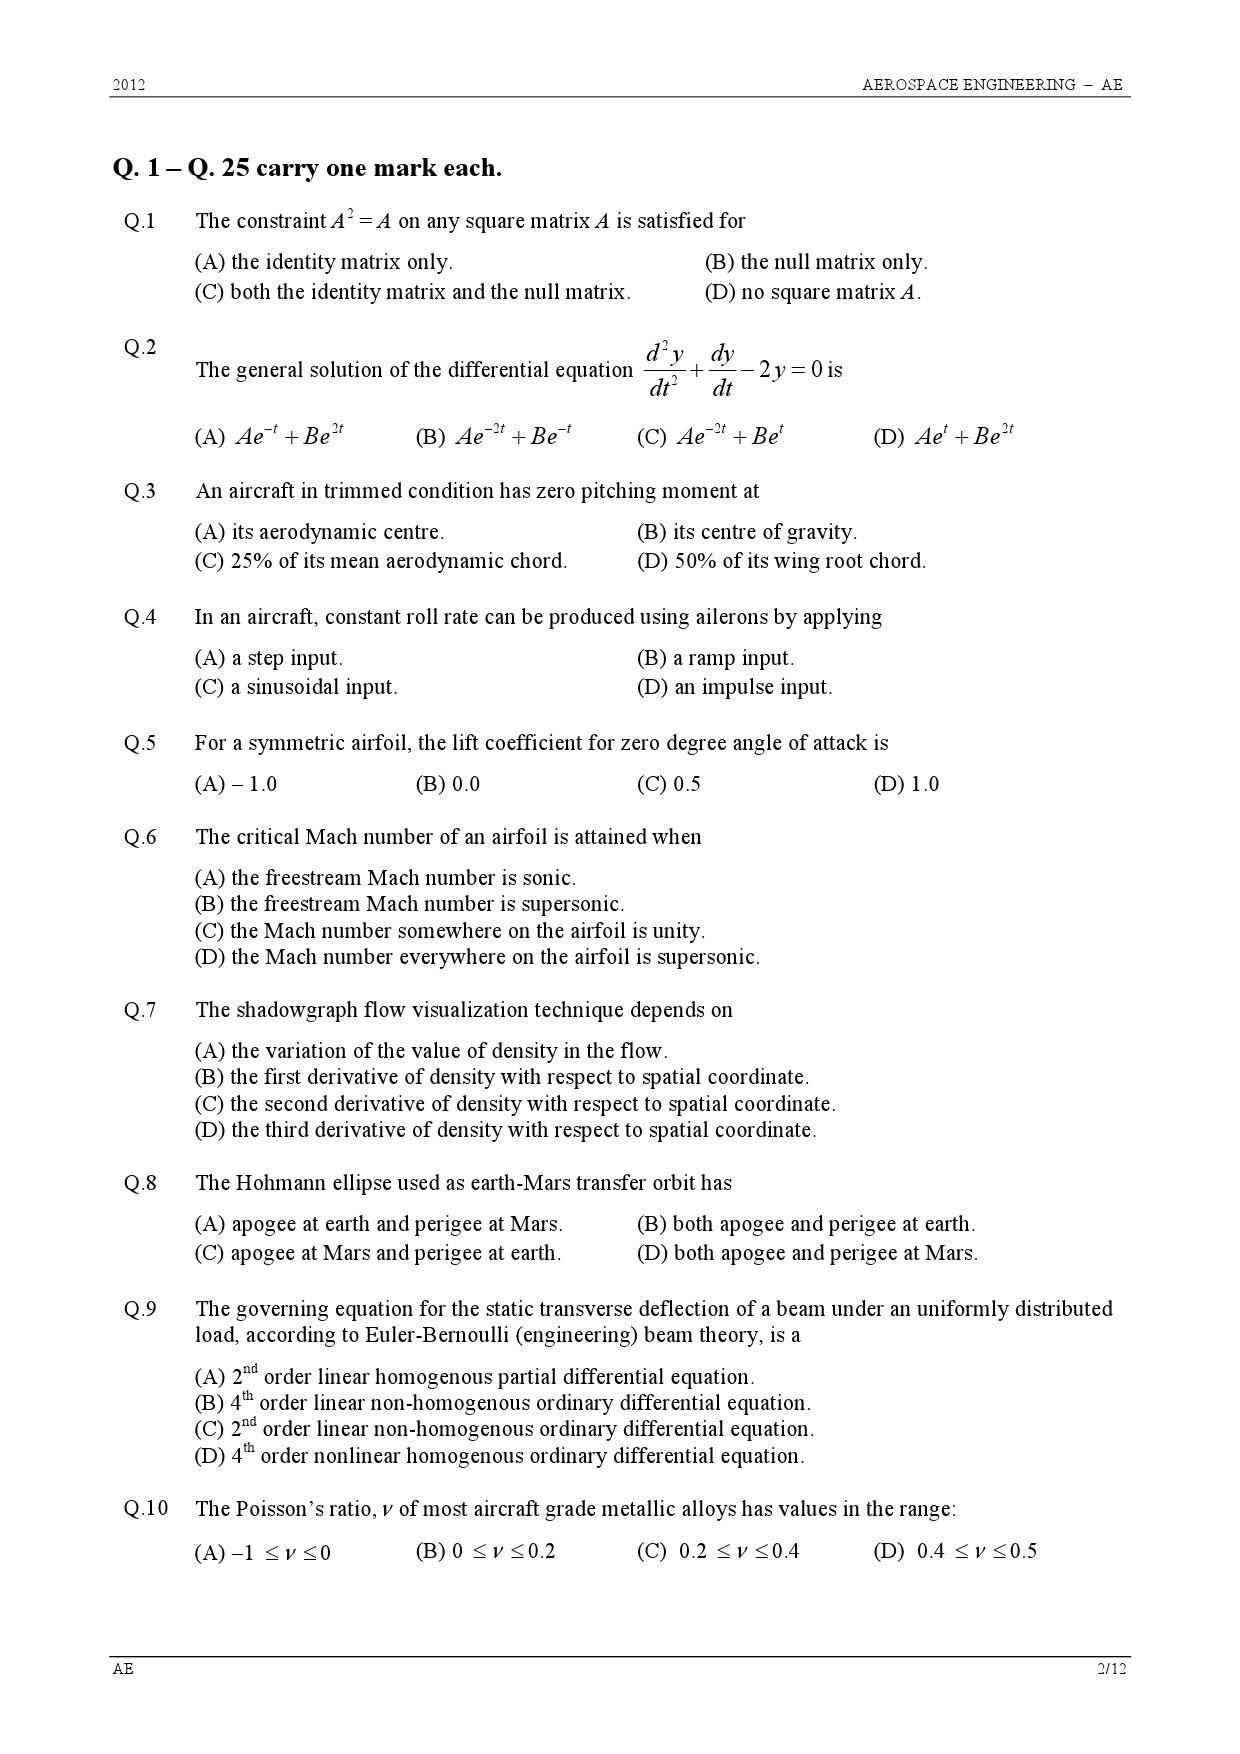 GATE Exam 2012 Aerospace Engineering Question Paper 2